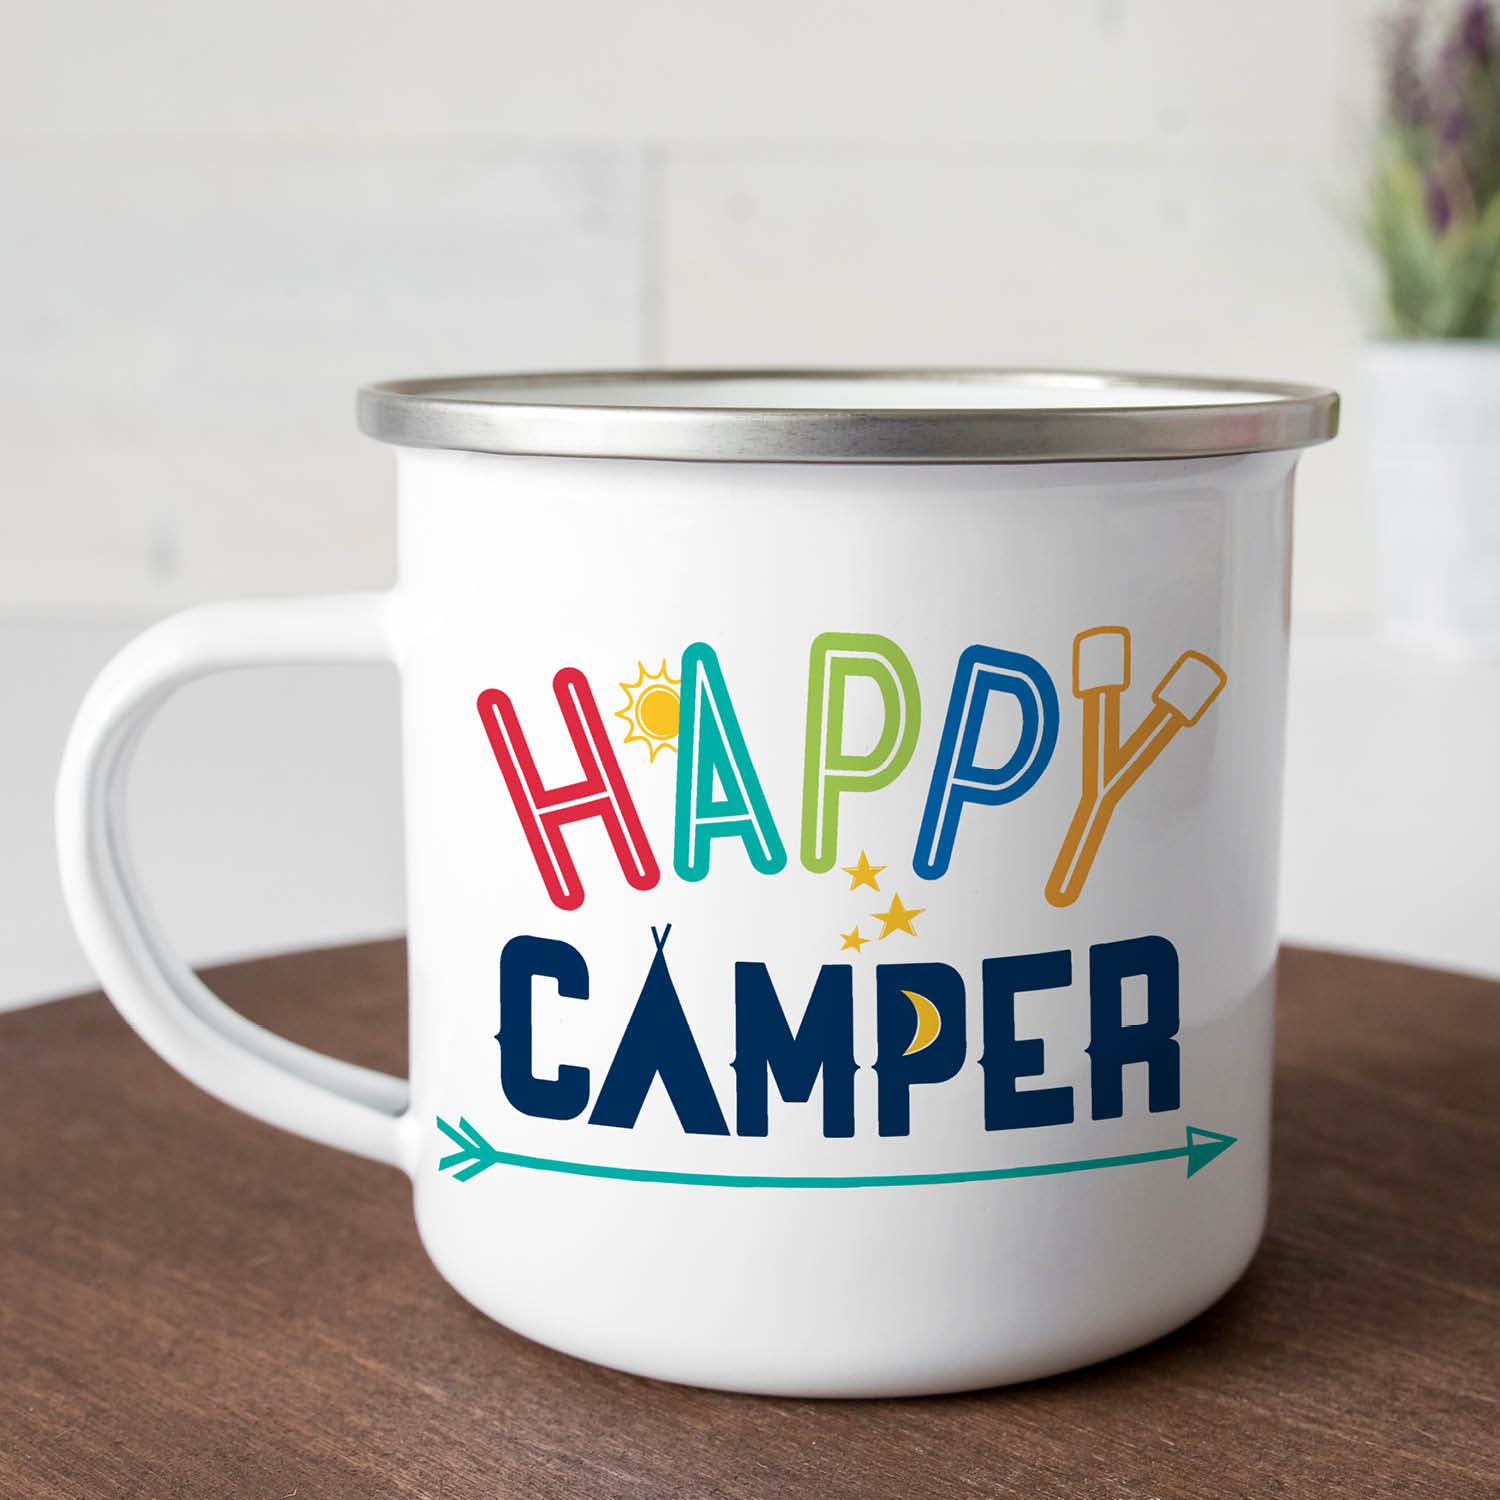 Happy Camper Personalized Camp Mug - 11 oz.